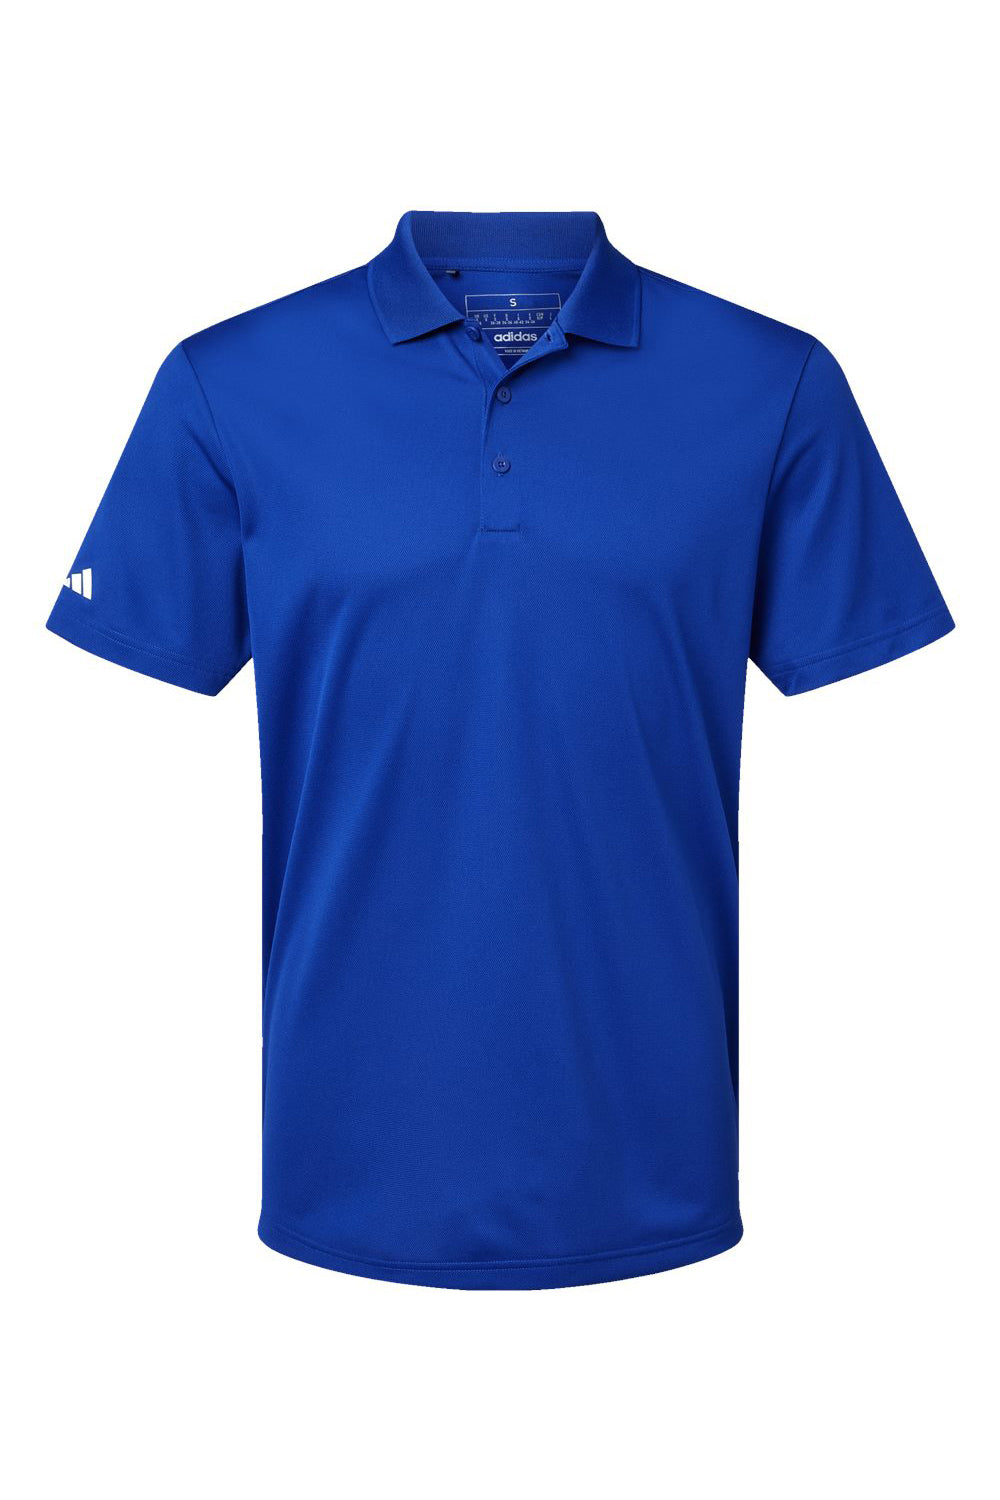 Adidas A430 Mens Basic Short Sleeve Polo Shirt Collegiate Royal Blue Flat Front